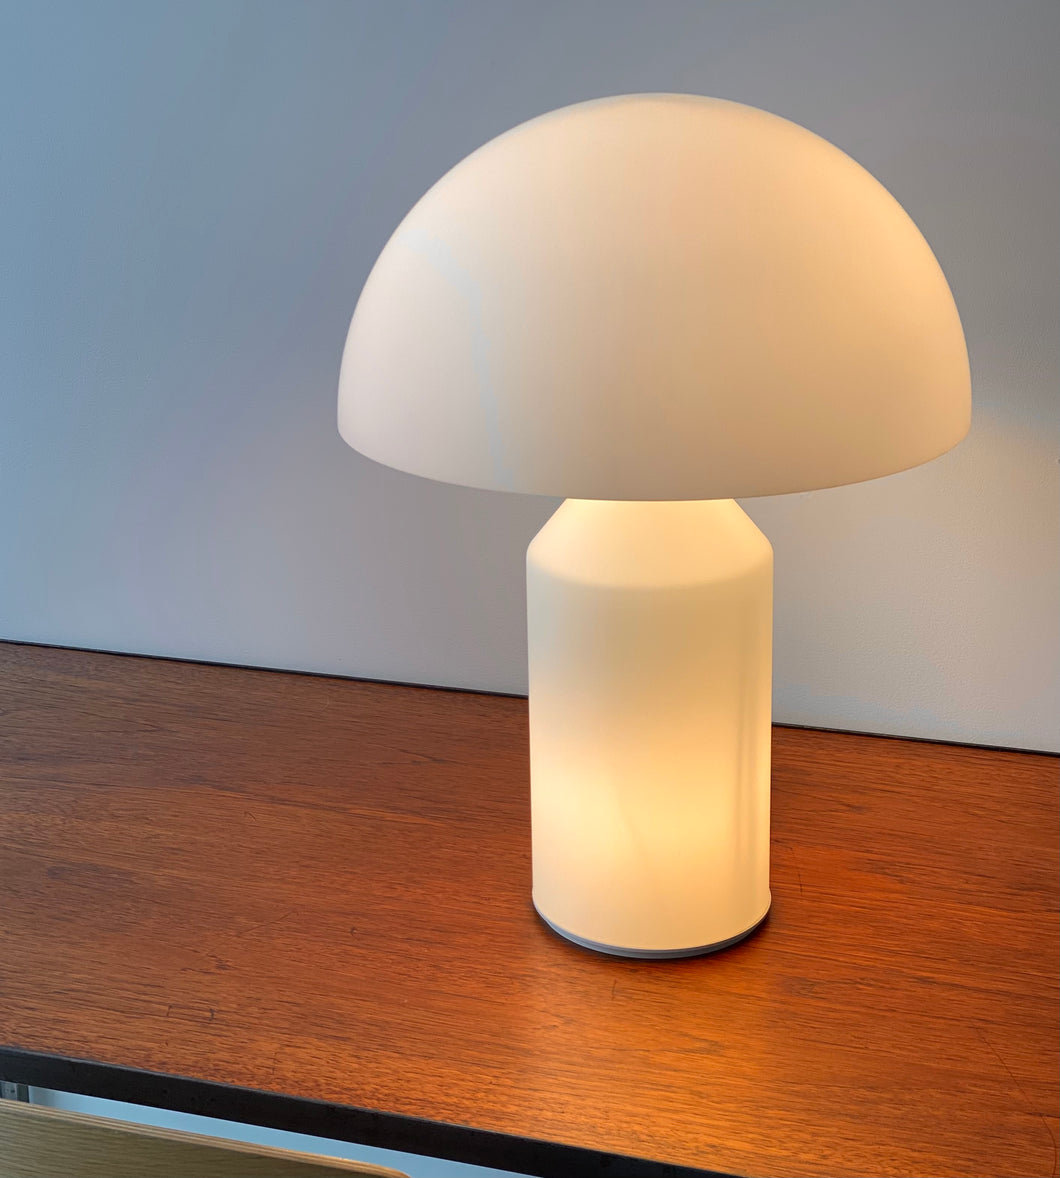 Atollo 237 table lamp by Vico Magistretti for Oluce